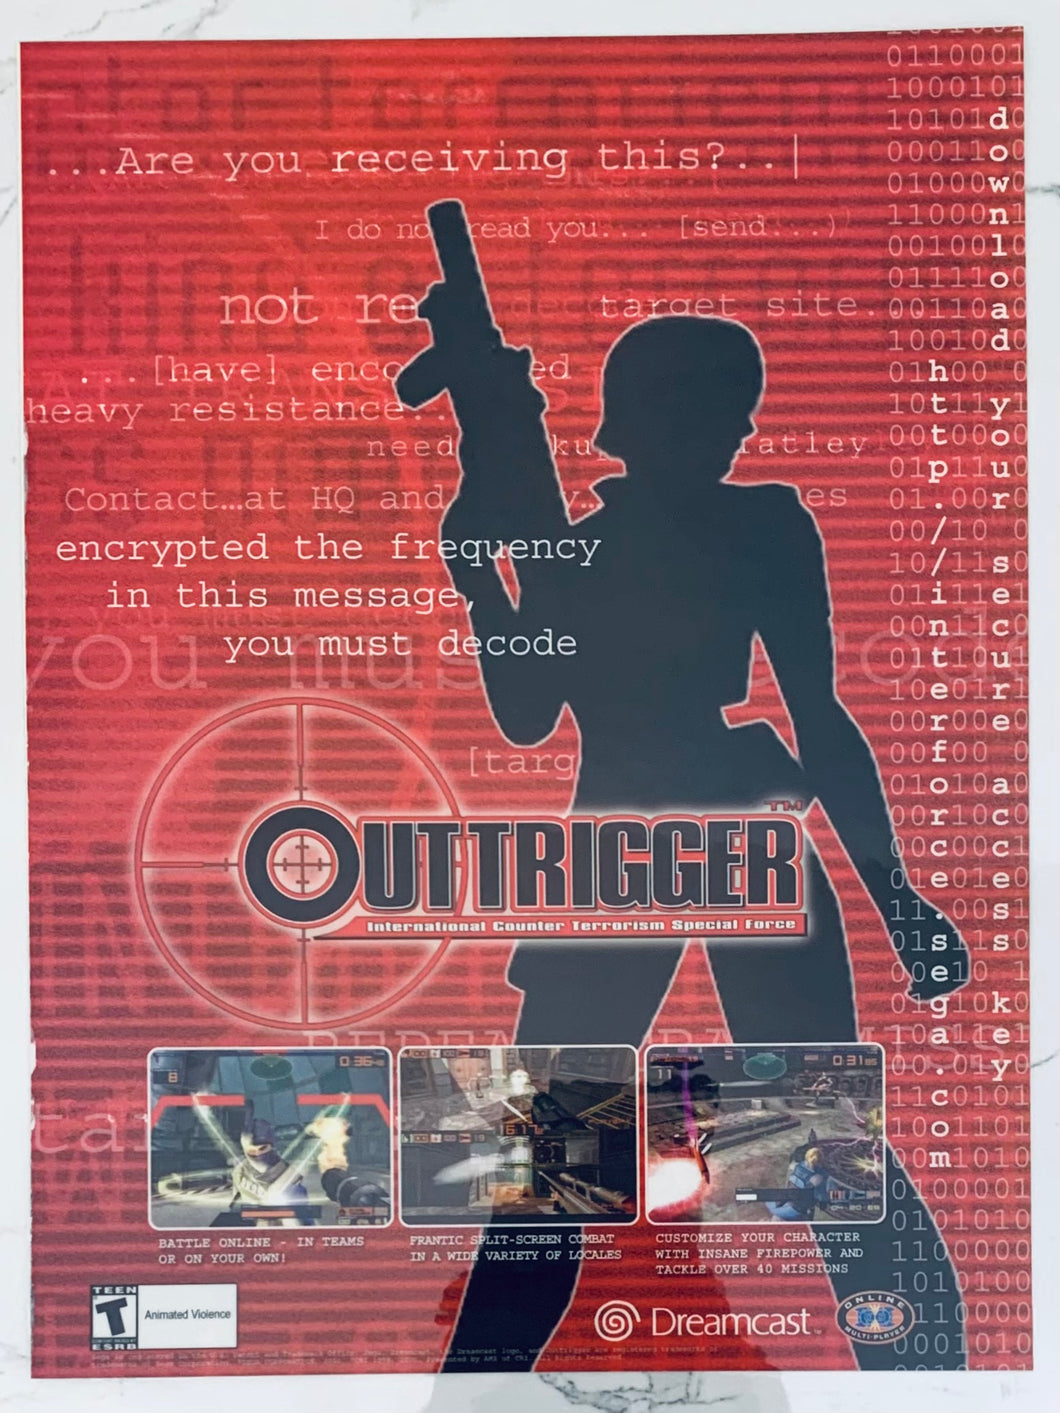 Outtrigger - Dreamcast - Original Vintage Advertisement - Print Ads - Laminated A4 Poster